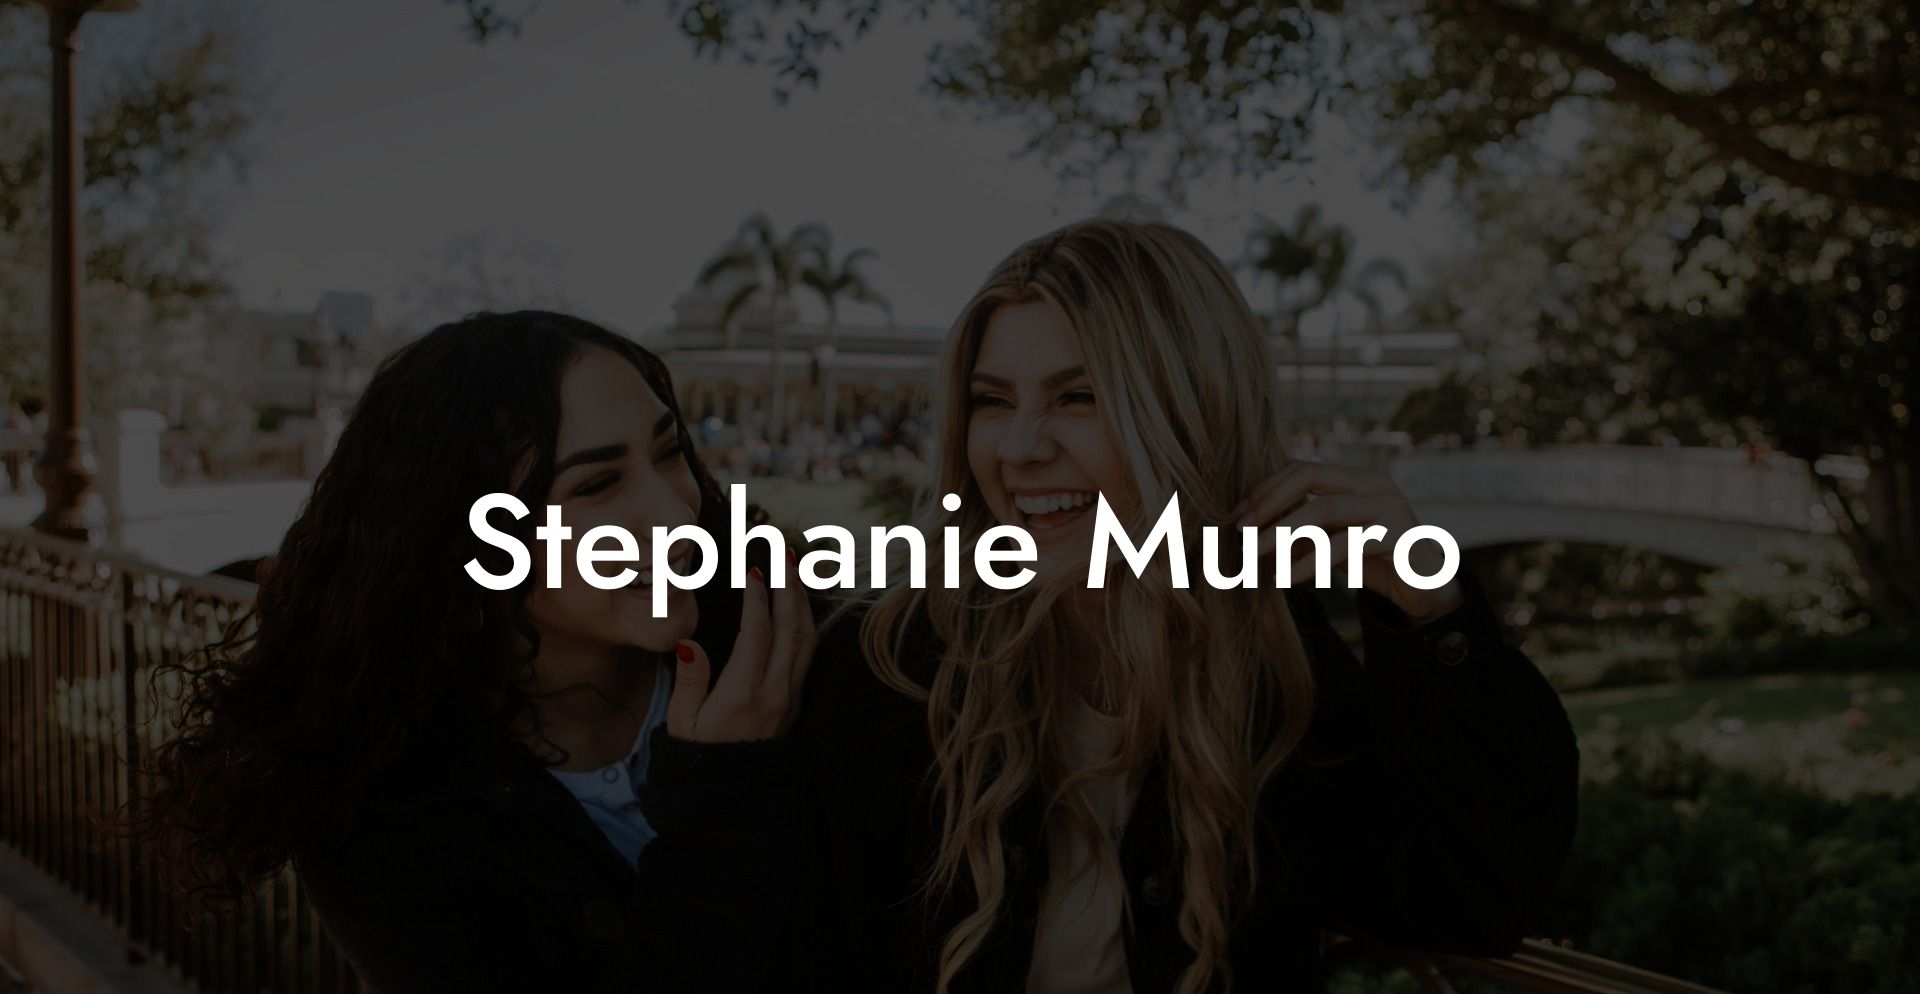 Stephanie Munro